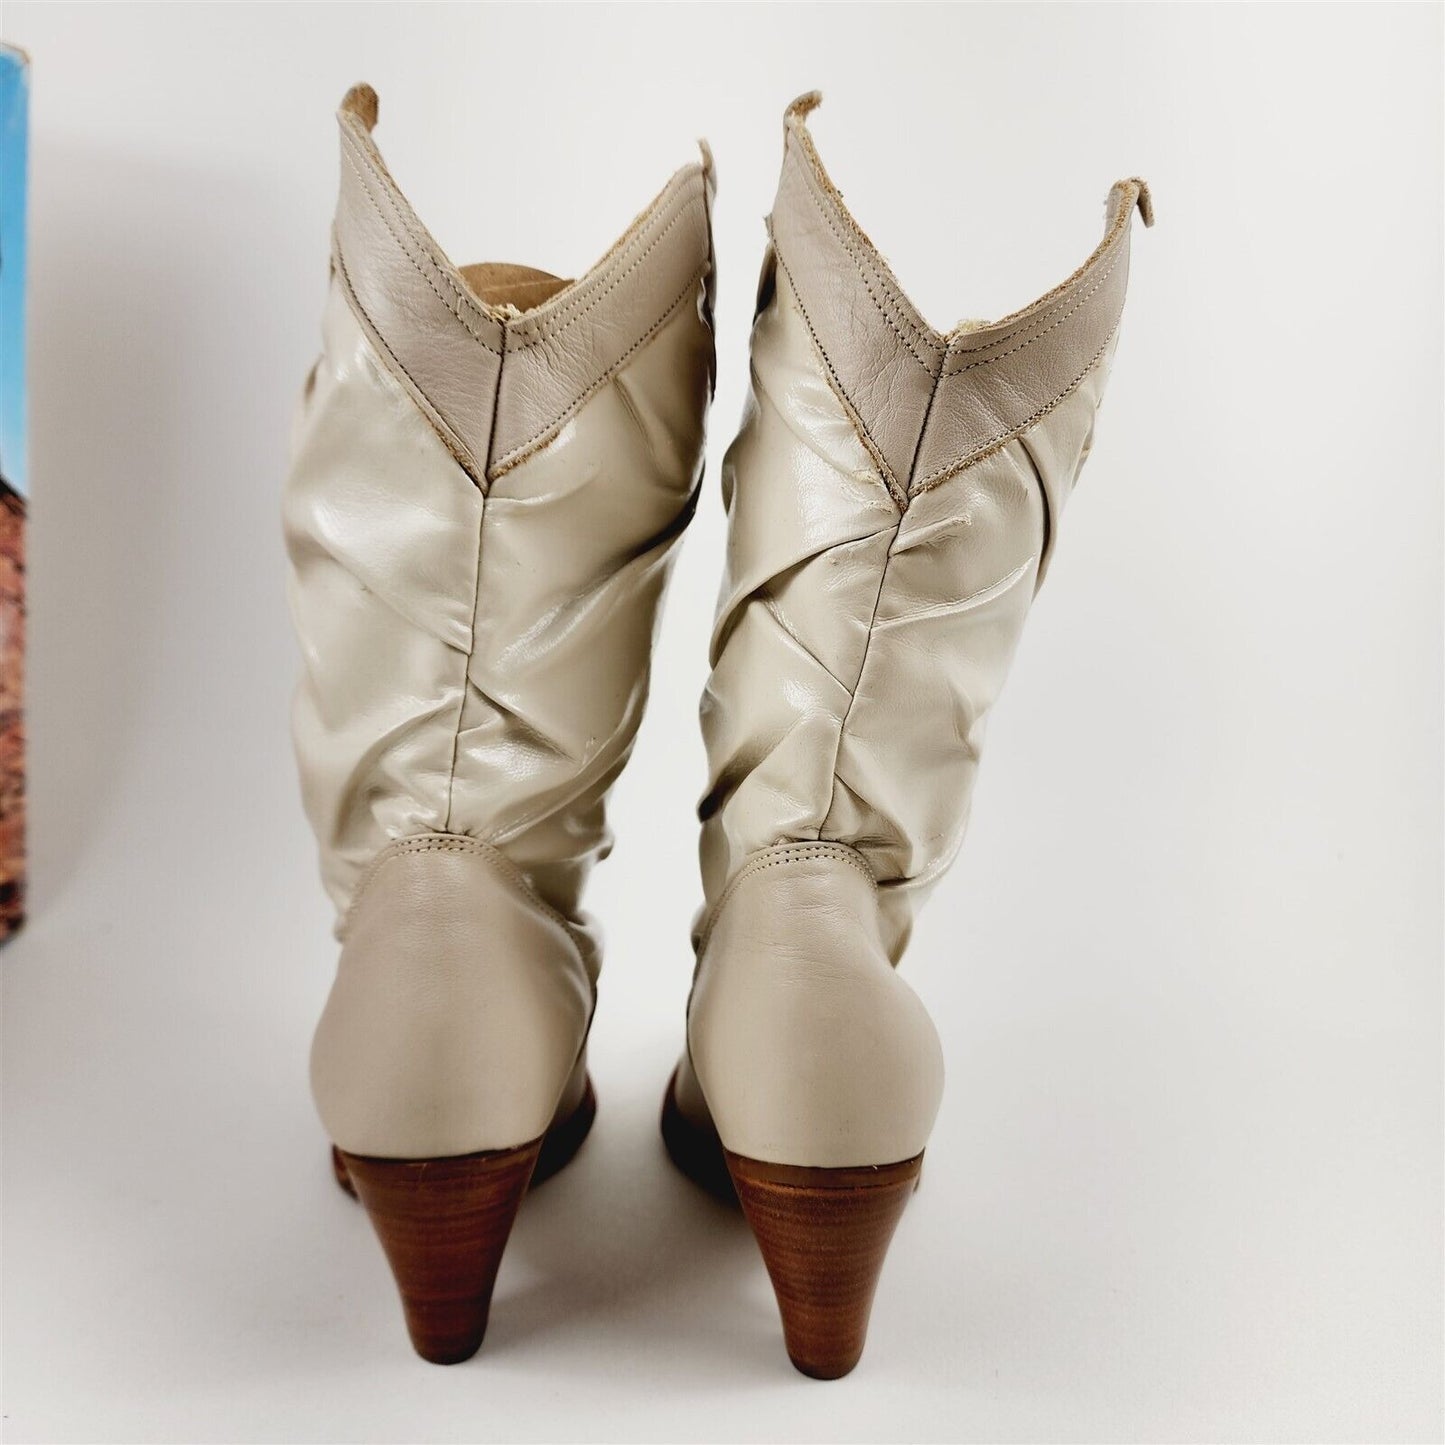 Vintage Laredo Cream Beige Leather Cowboy Boots - New w/ Box - Size 6B